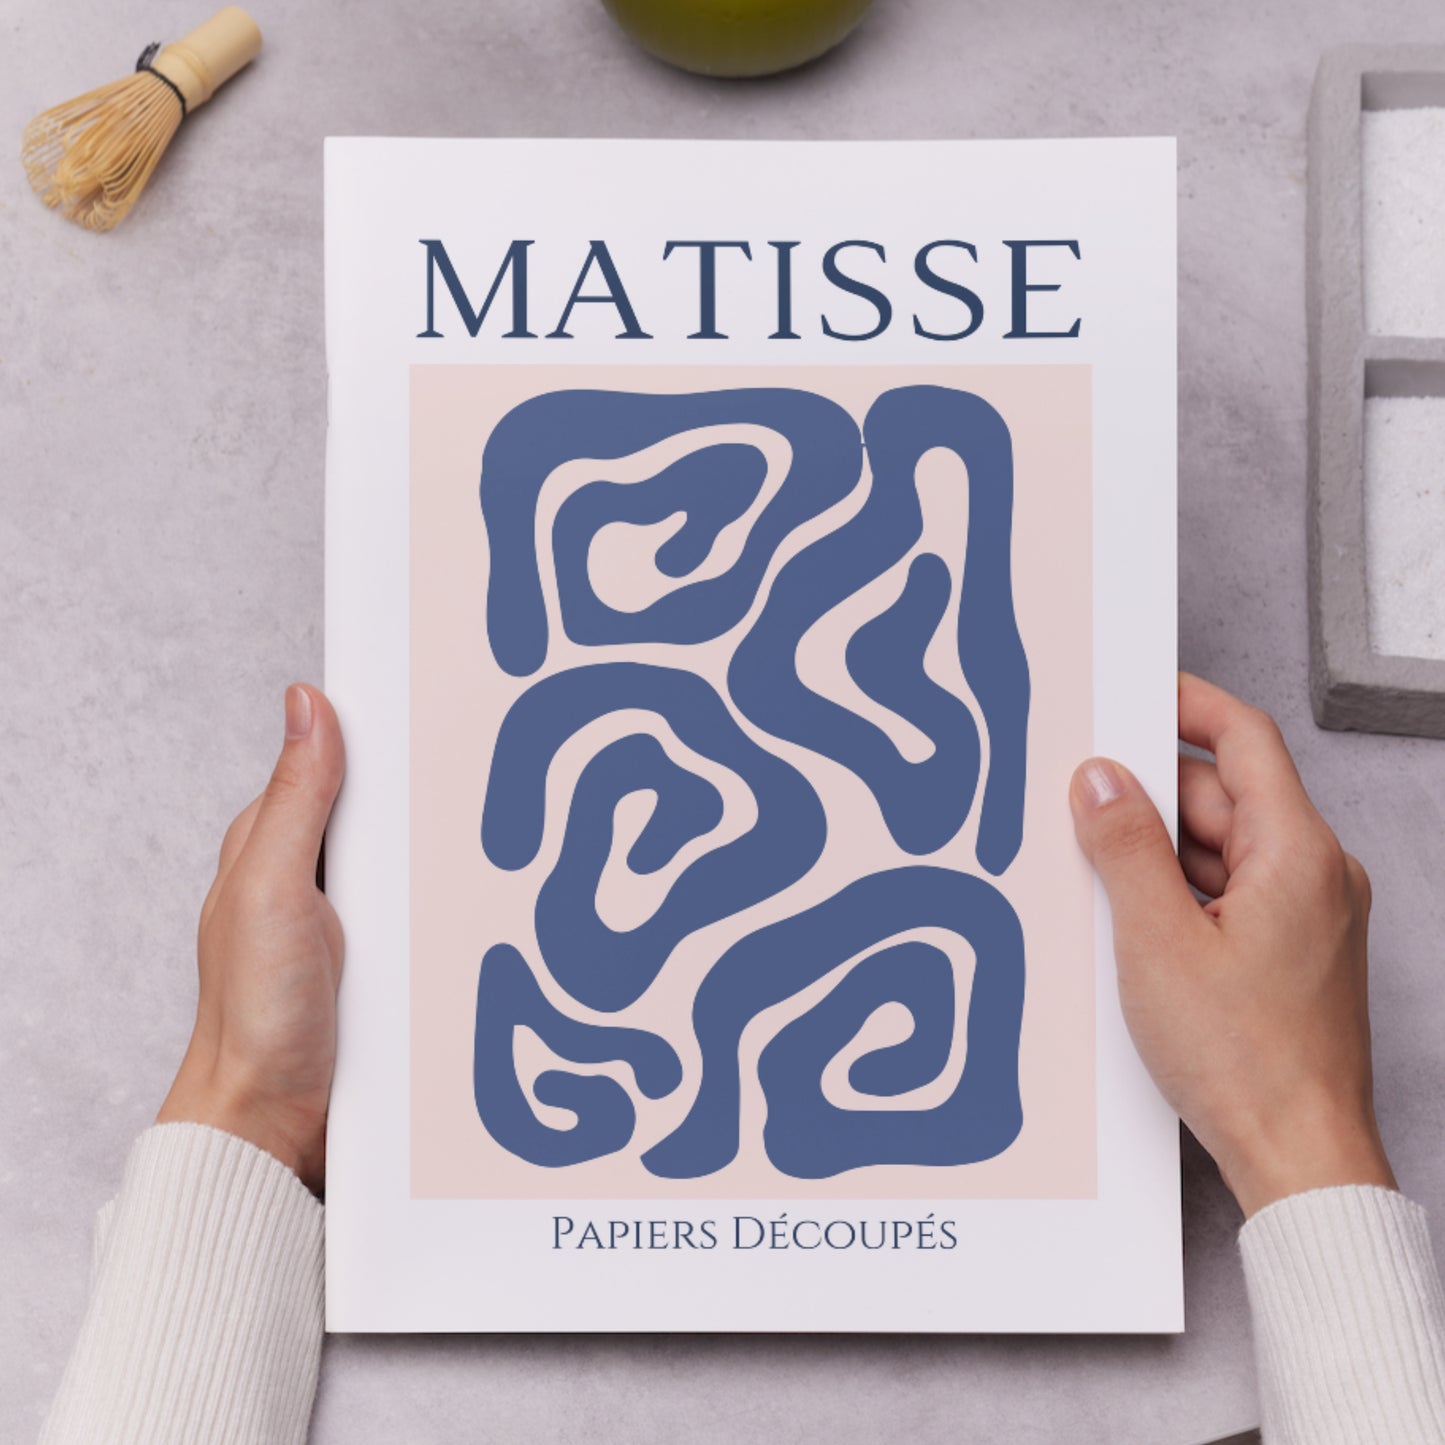 Matisse, No.3 Art Print, A3/A4/A5 Sizes